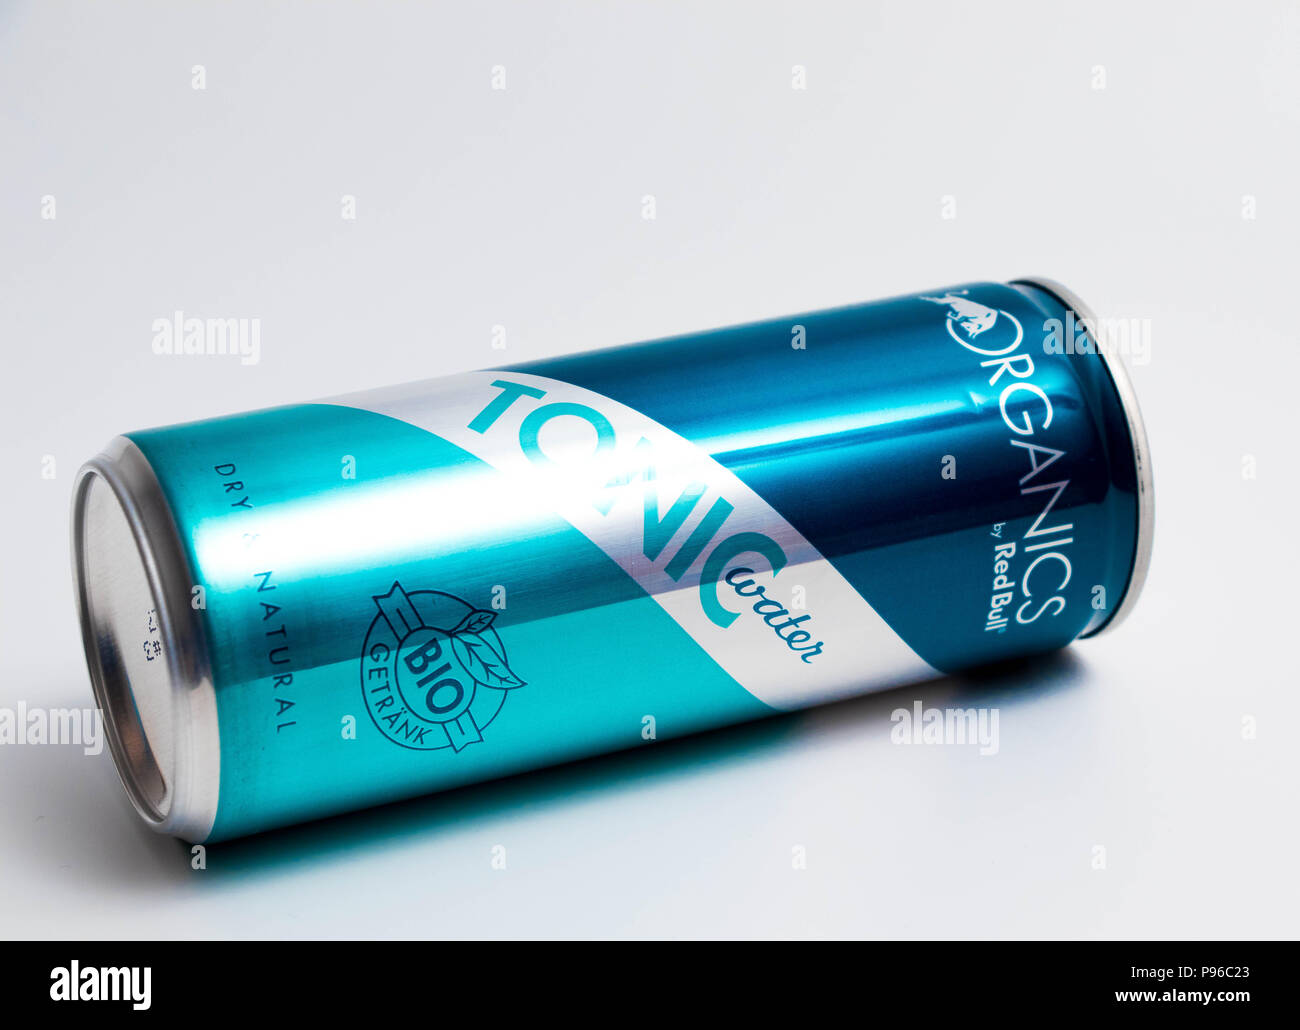 New Tonic water Red Bull organic certified Stock Photo